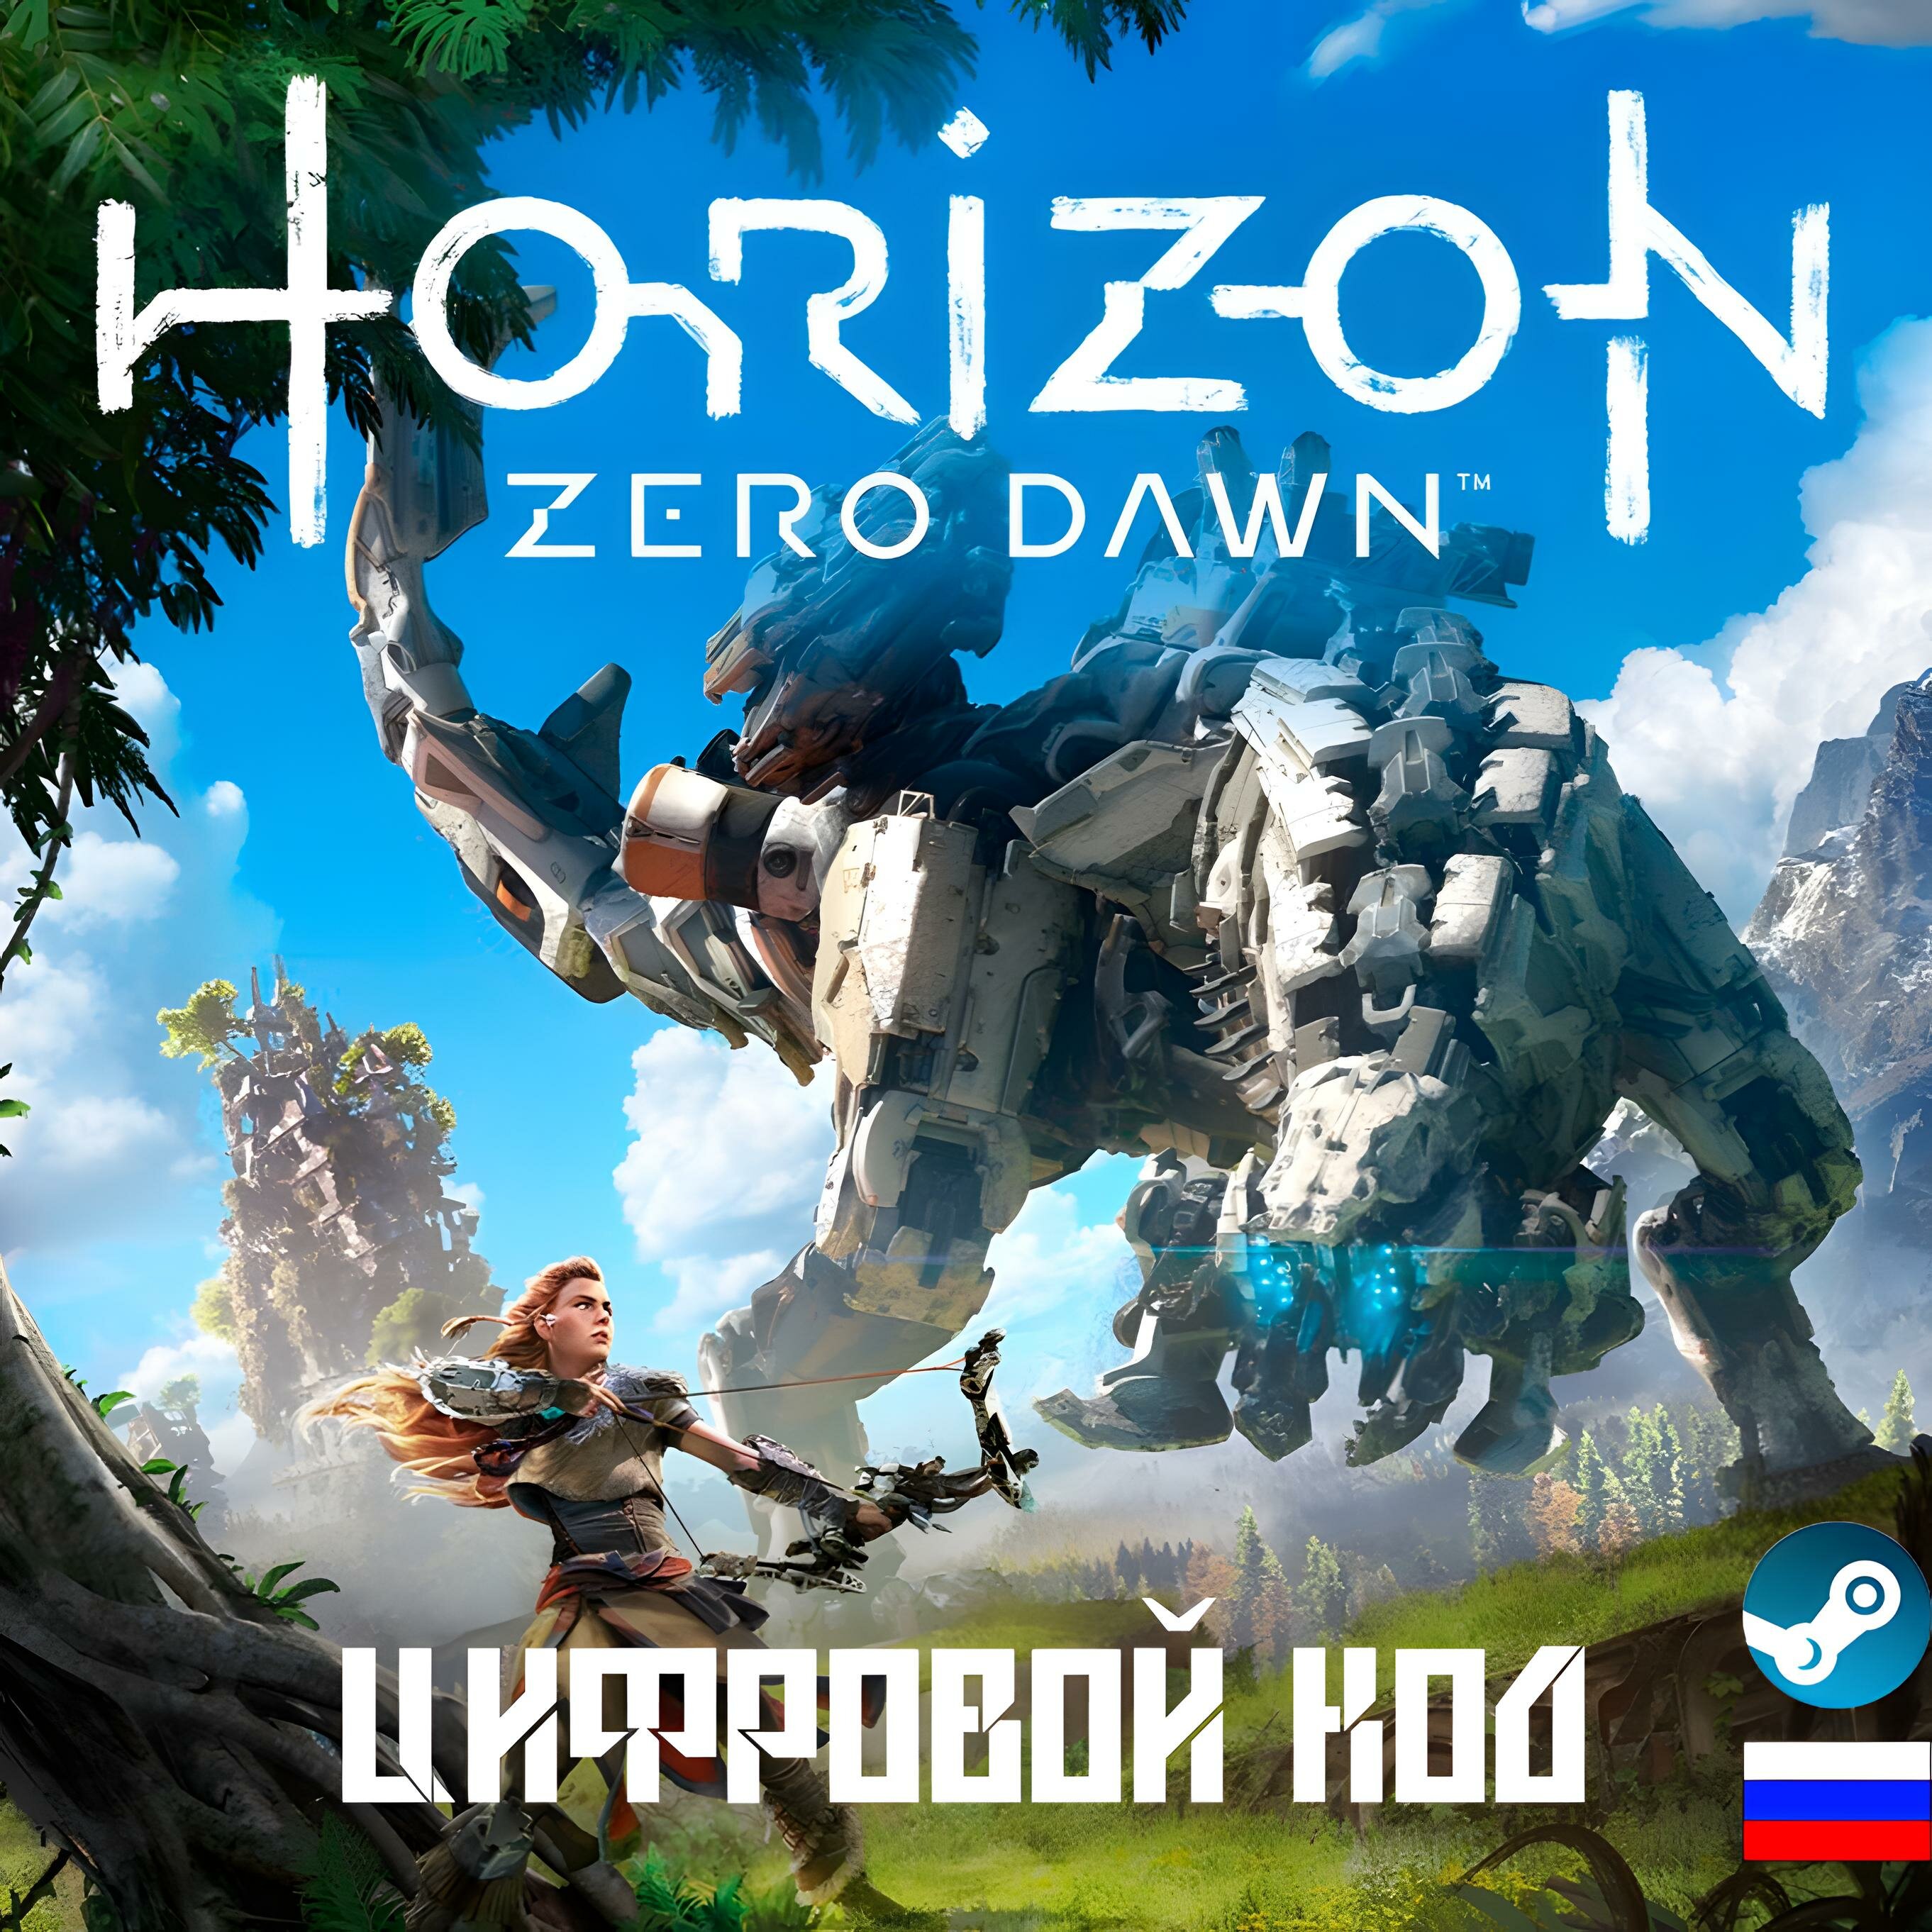 PC Игра Horizon Zero Dawn Complete Edition PC STEAM (Цифровая версия регион активации - Россия)